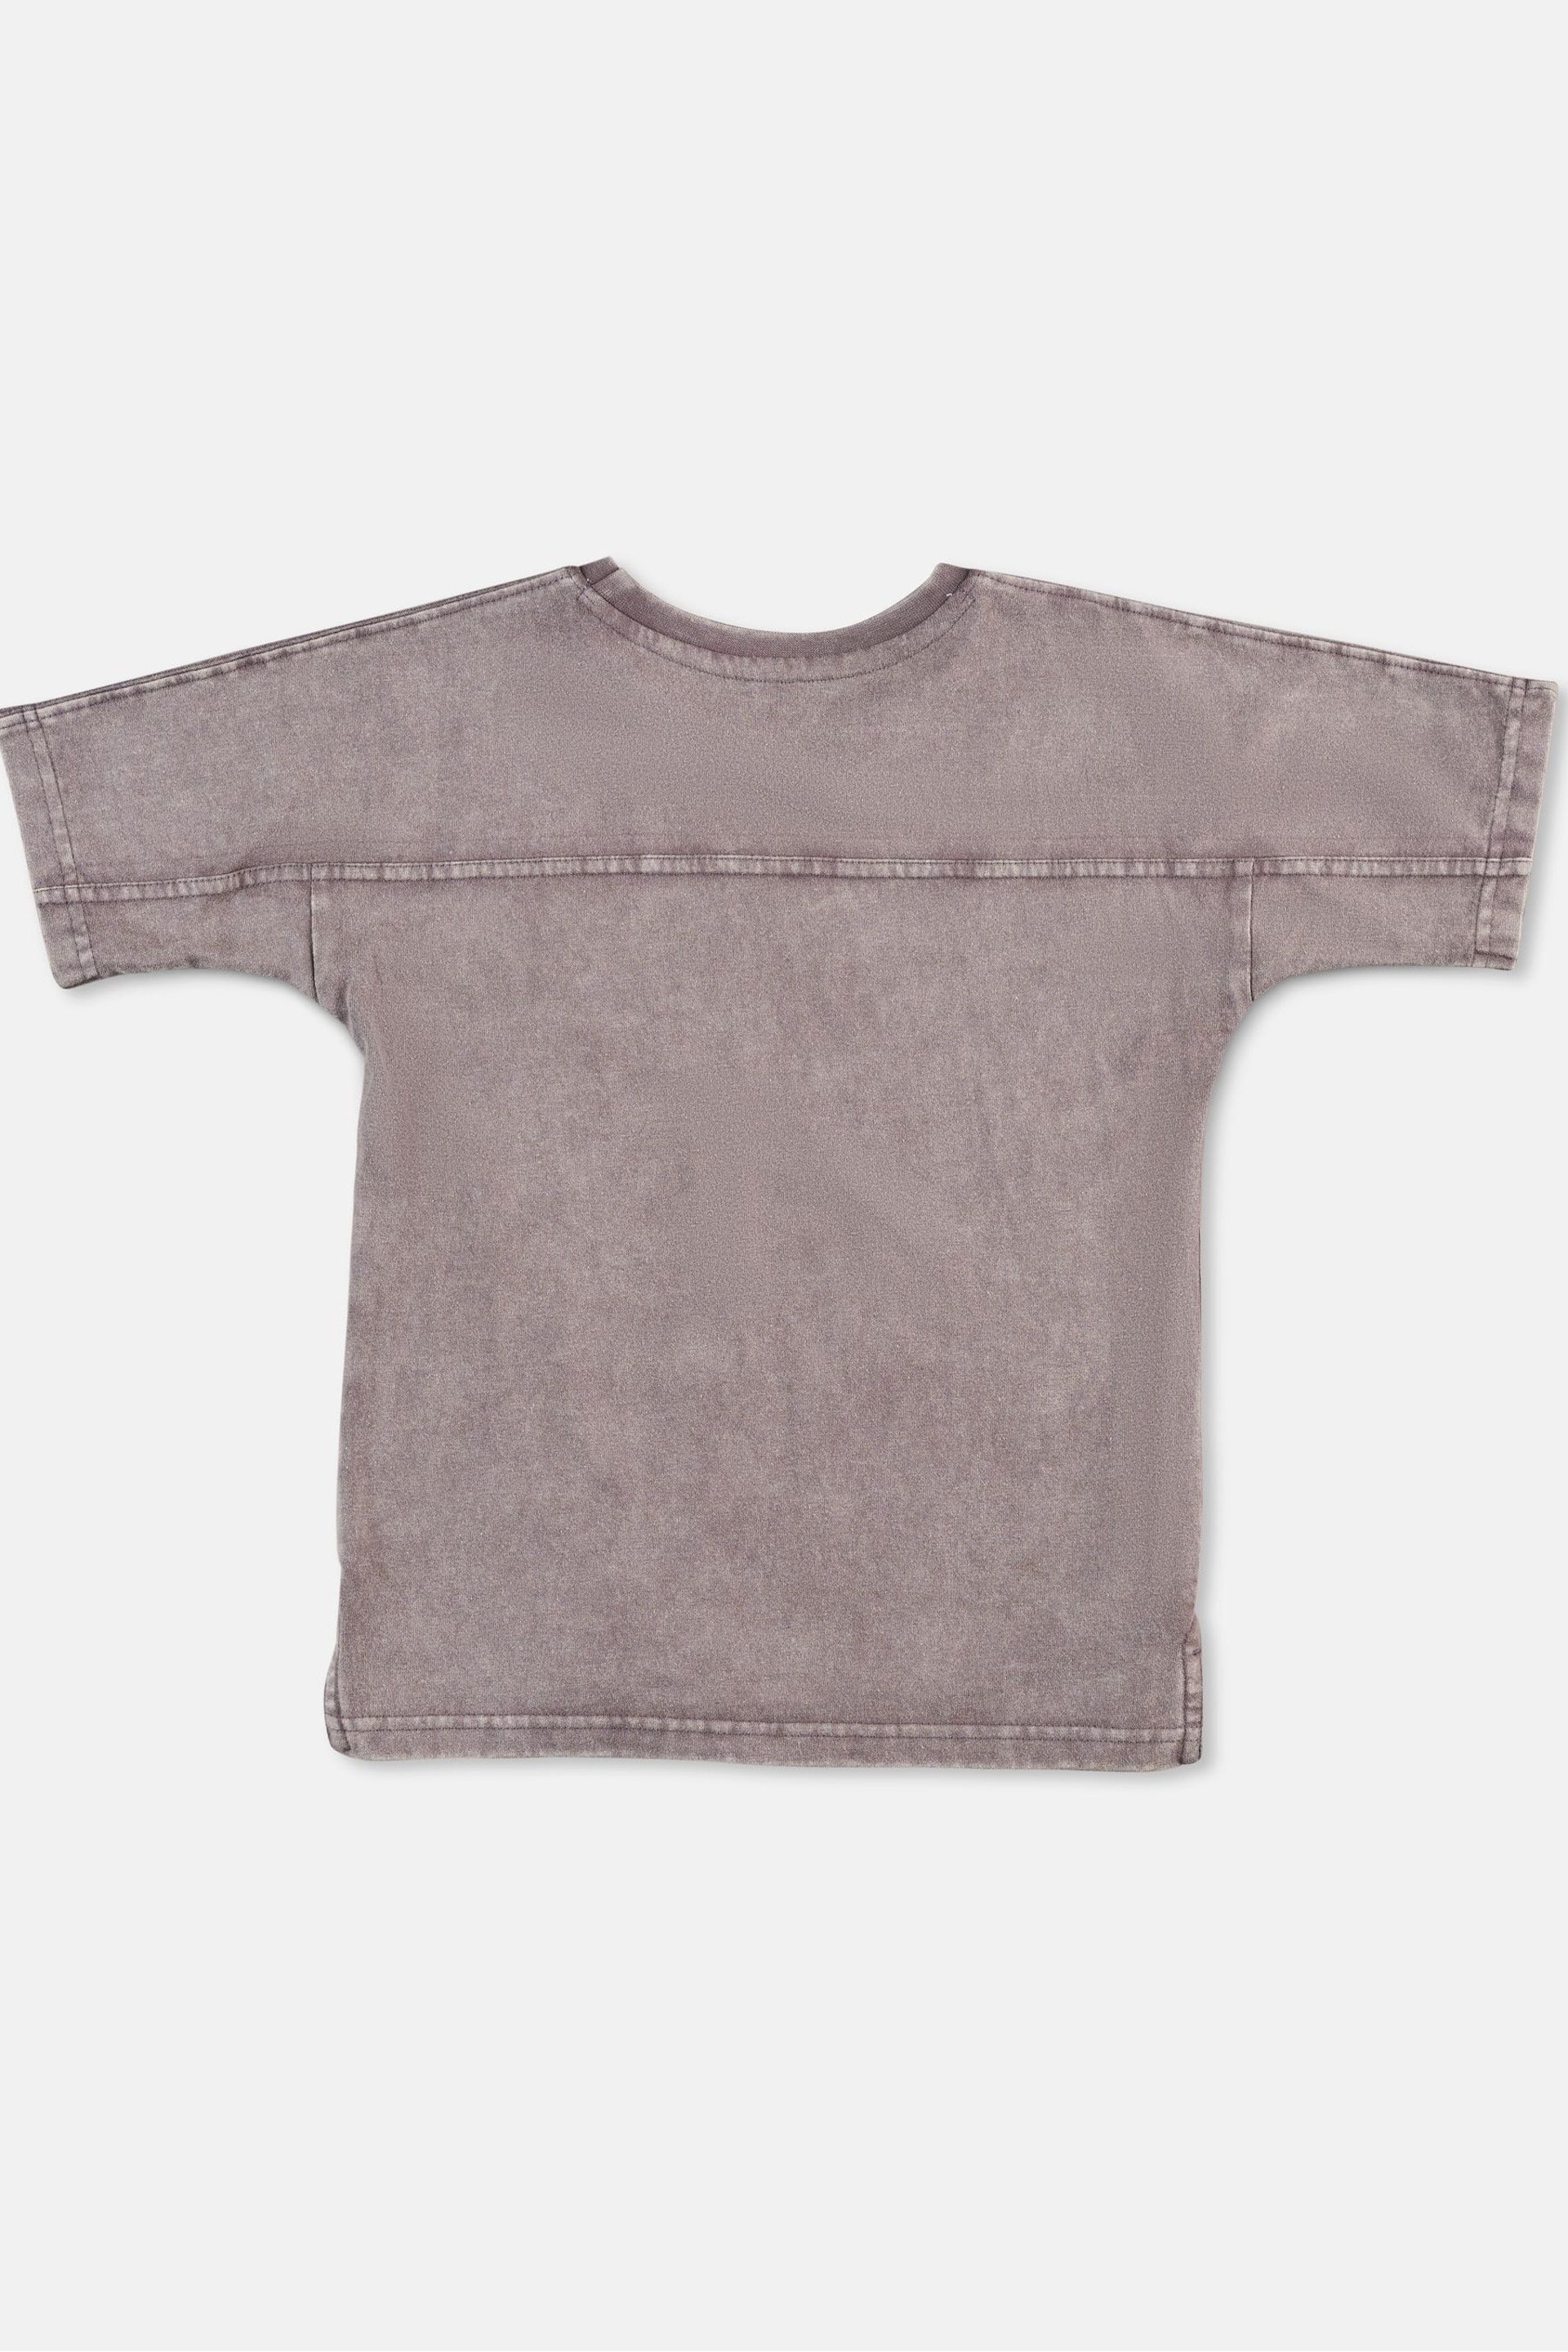 Angel & Rocket Grey Evan Acid Wash T-Shirt - Image 4 of 5